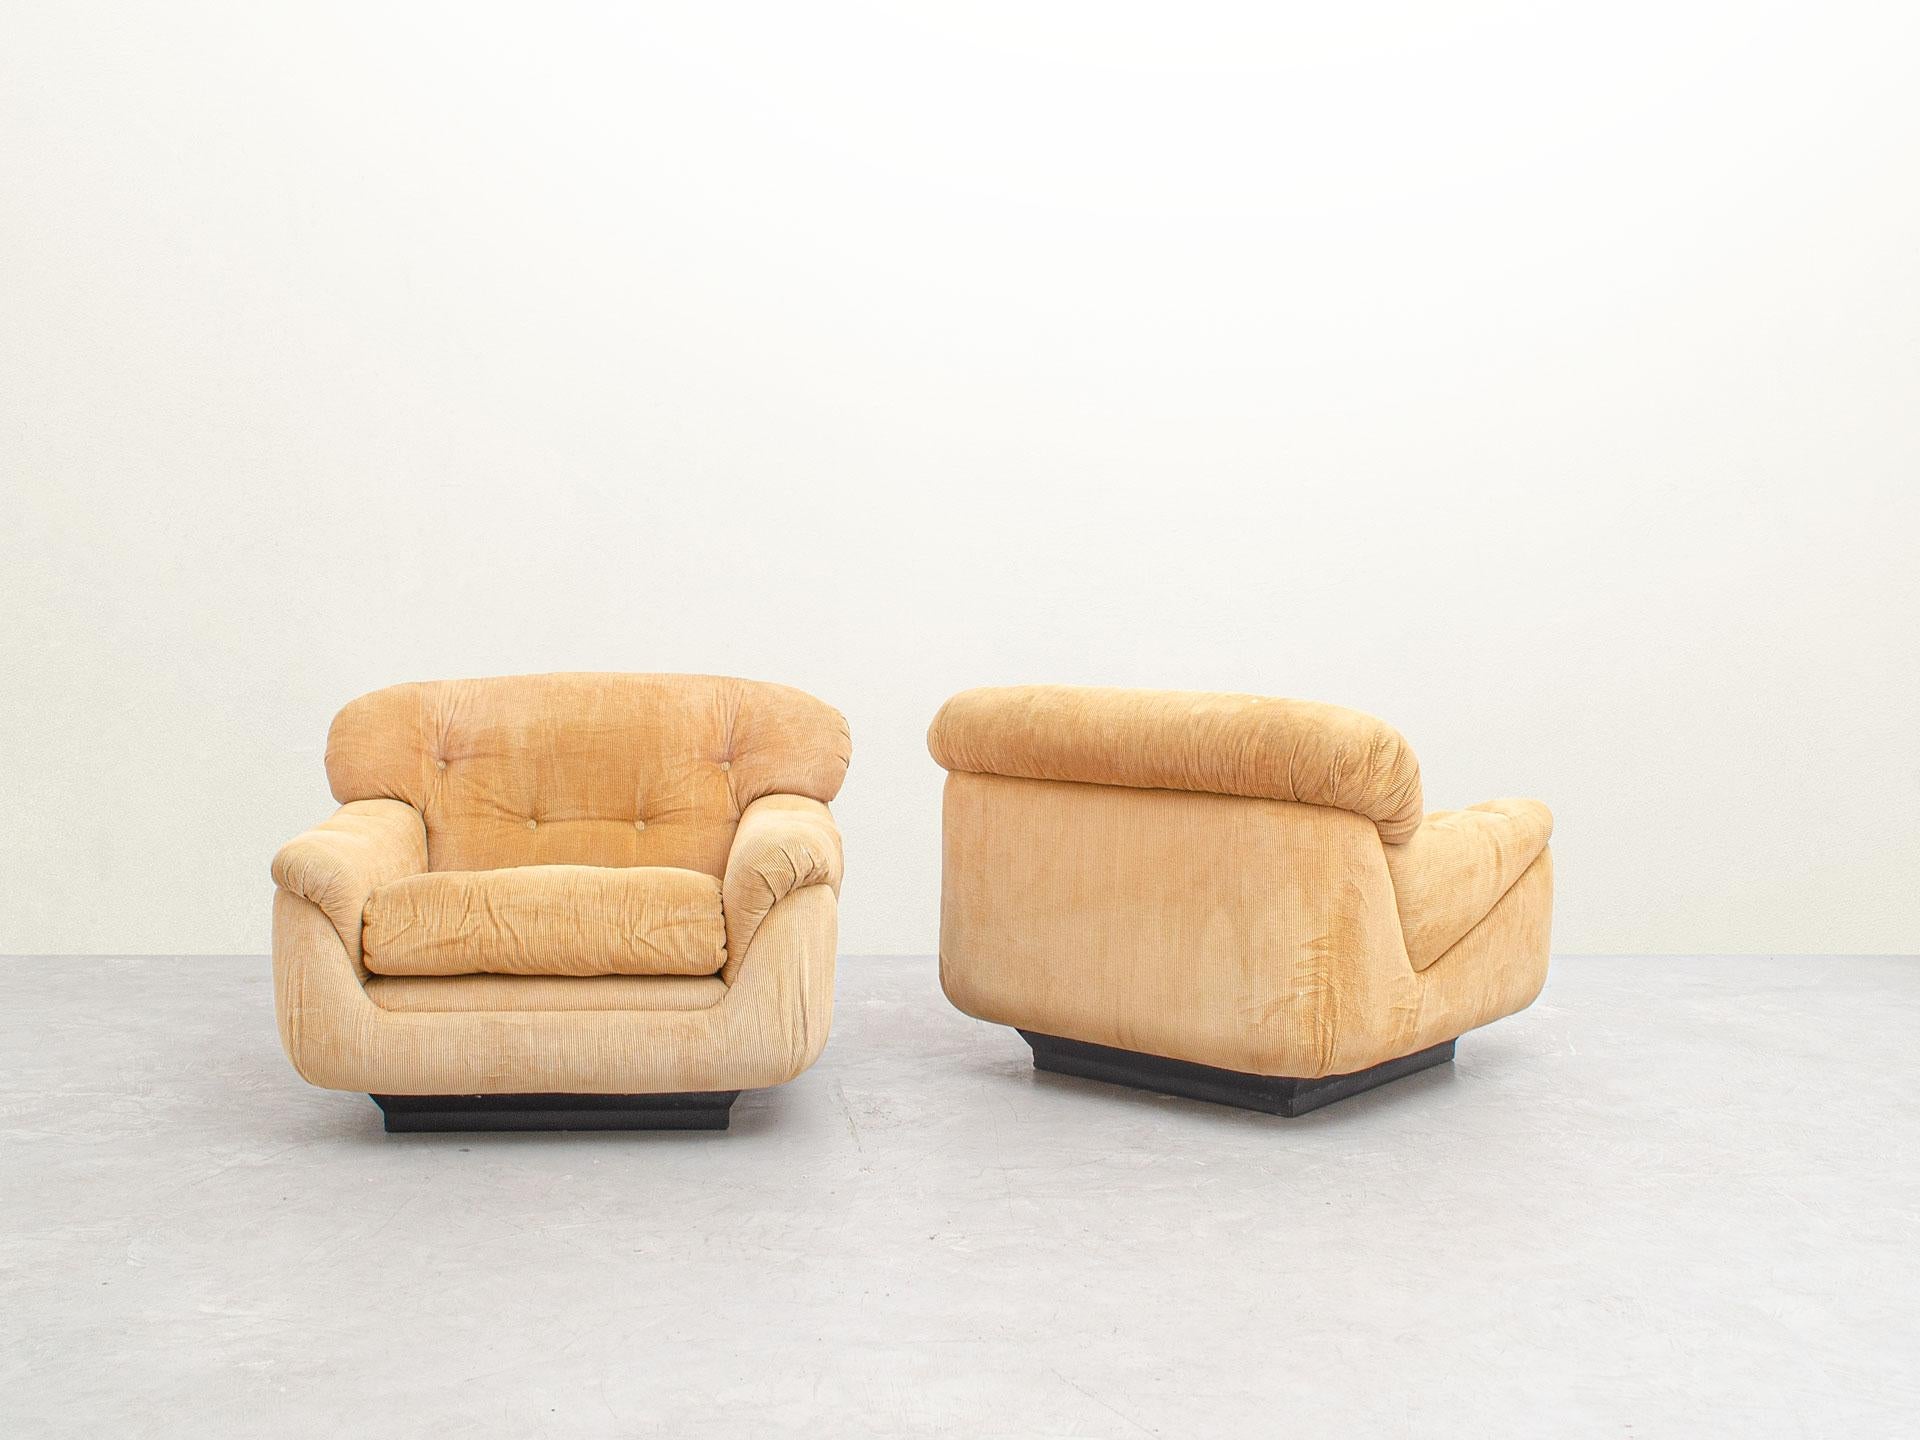 Mid-20th Century Rare Pair of Armchairs by Jorge Zalszupin, 60's Midcentury Brazilian Design